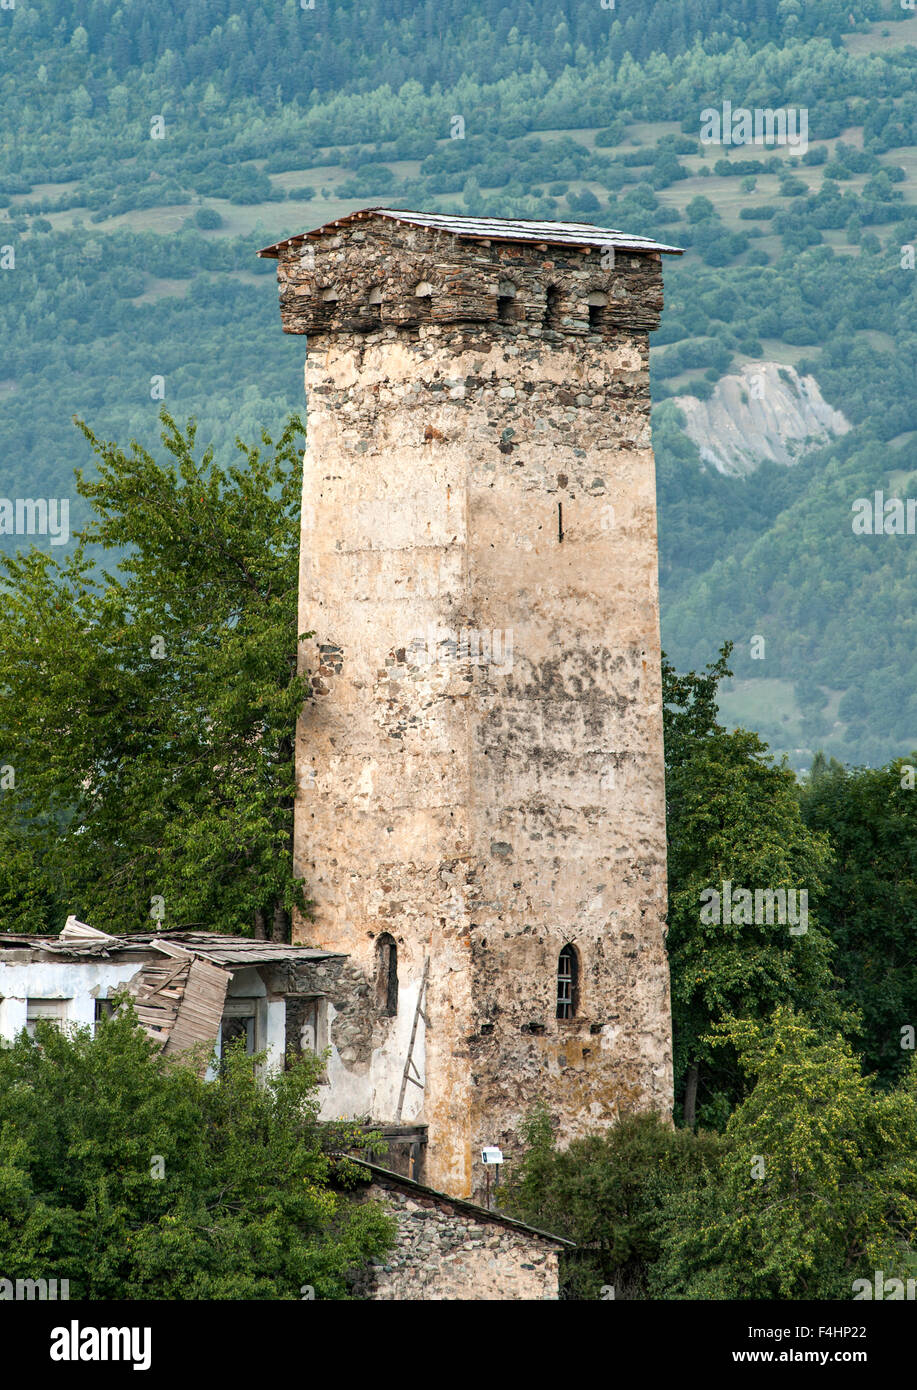 Svan Turm im Dorf Mestia Swanetien Region Nordwesten Georgiens. Stockfoto